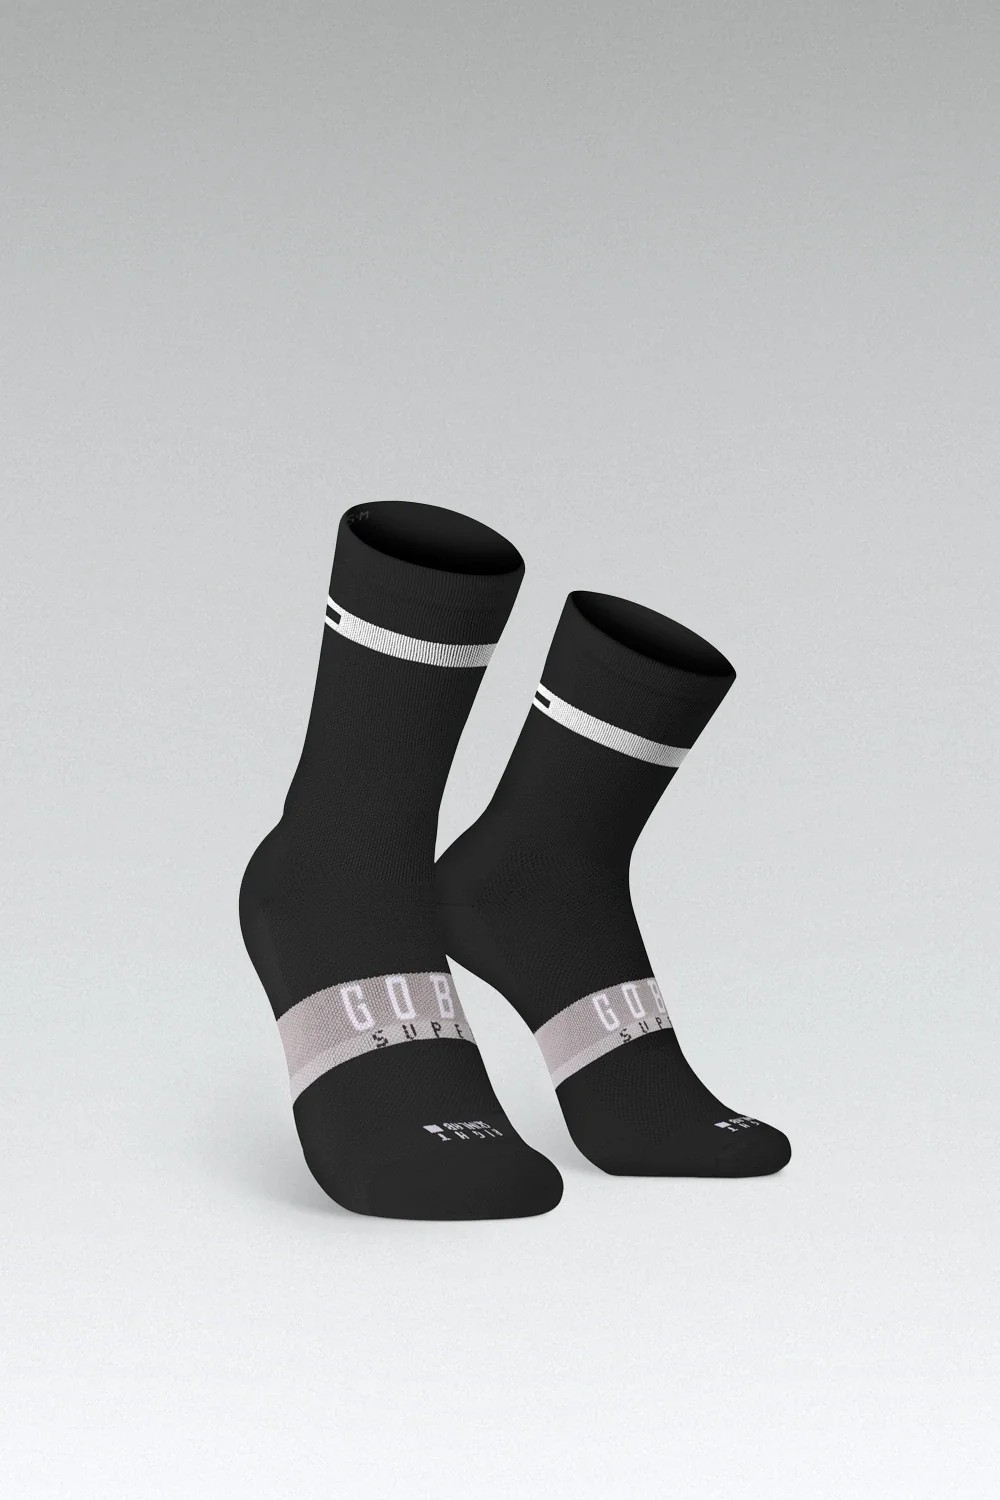 Gobik Superb Estandar Socks | Unisex